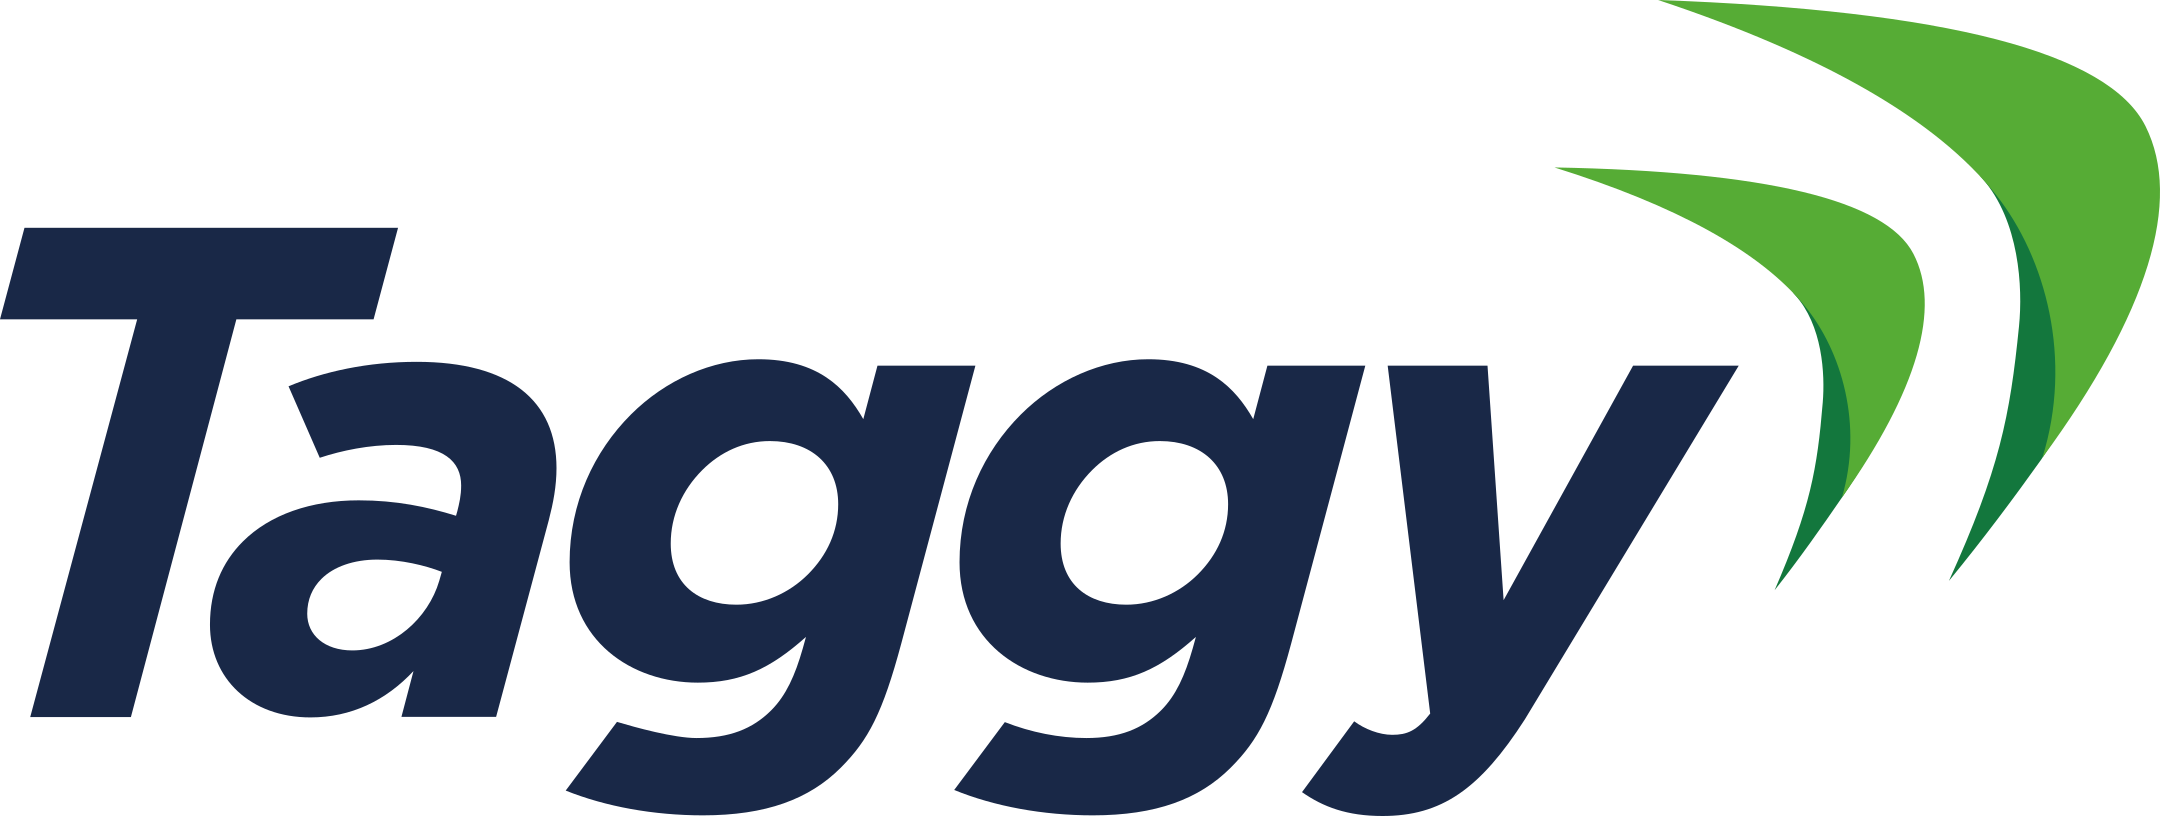 taggy logo 1 - Taggy Logo